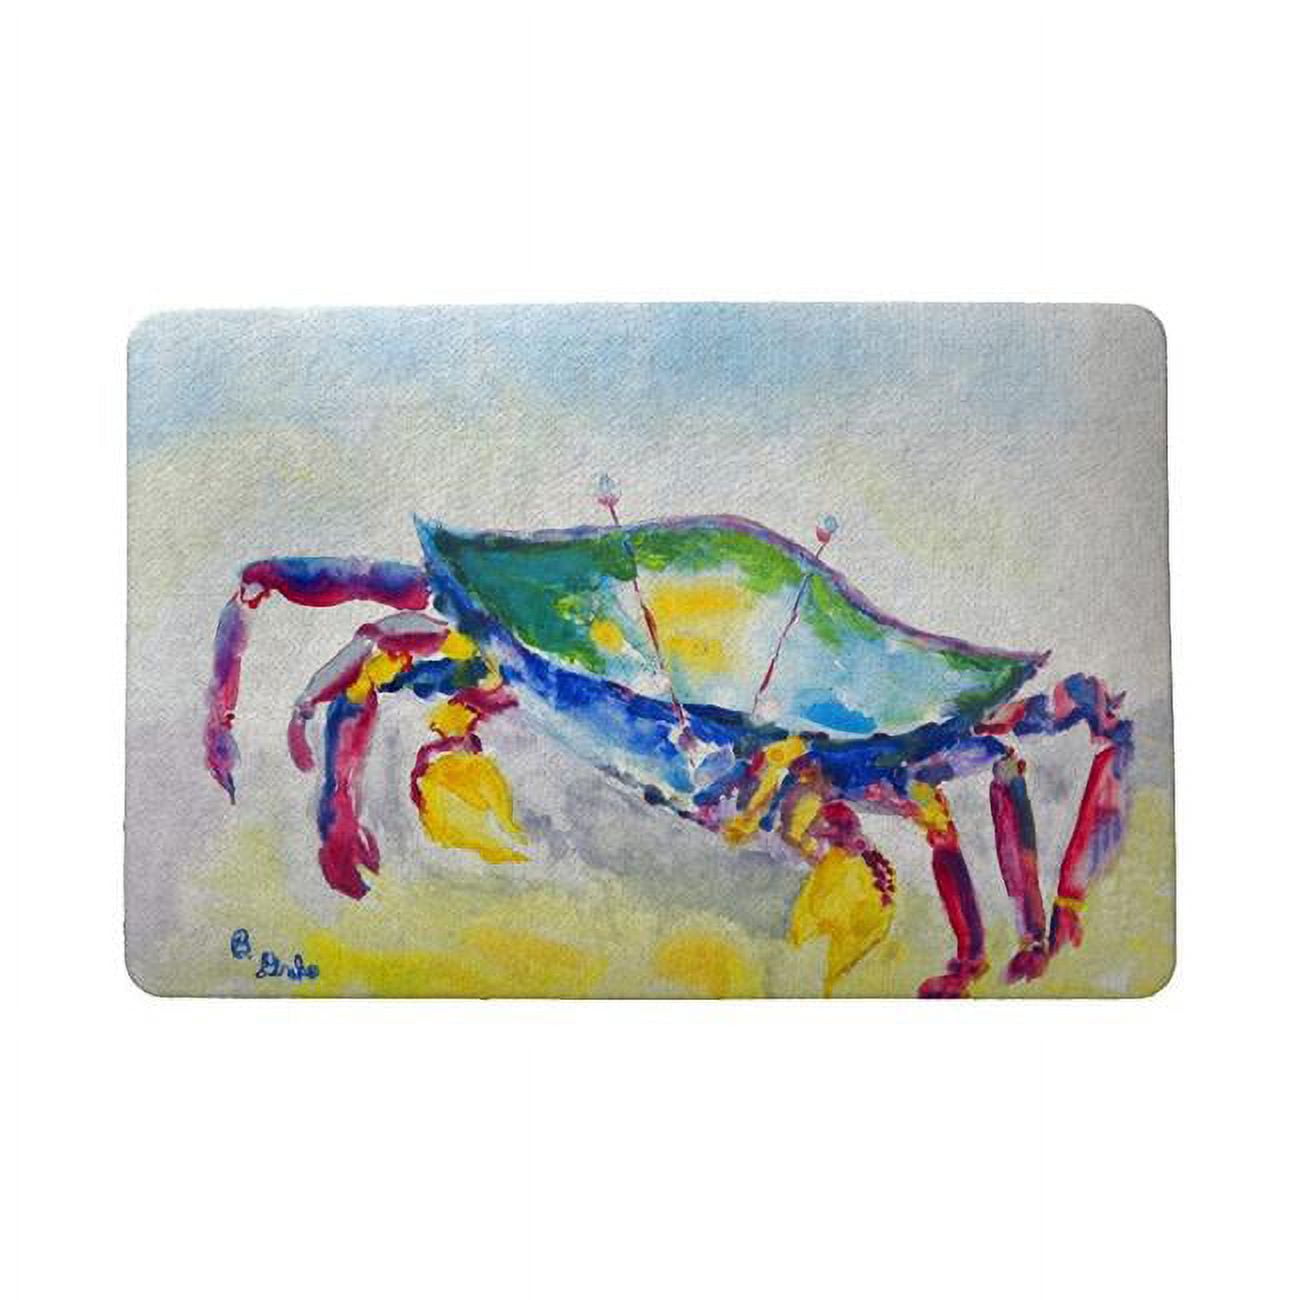 Dm896g 30 X 50 In. Crawling Crab Door Mat